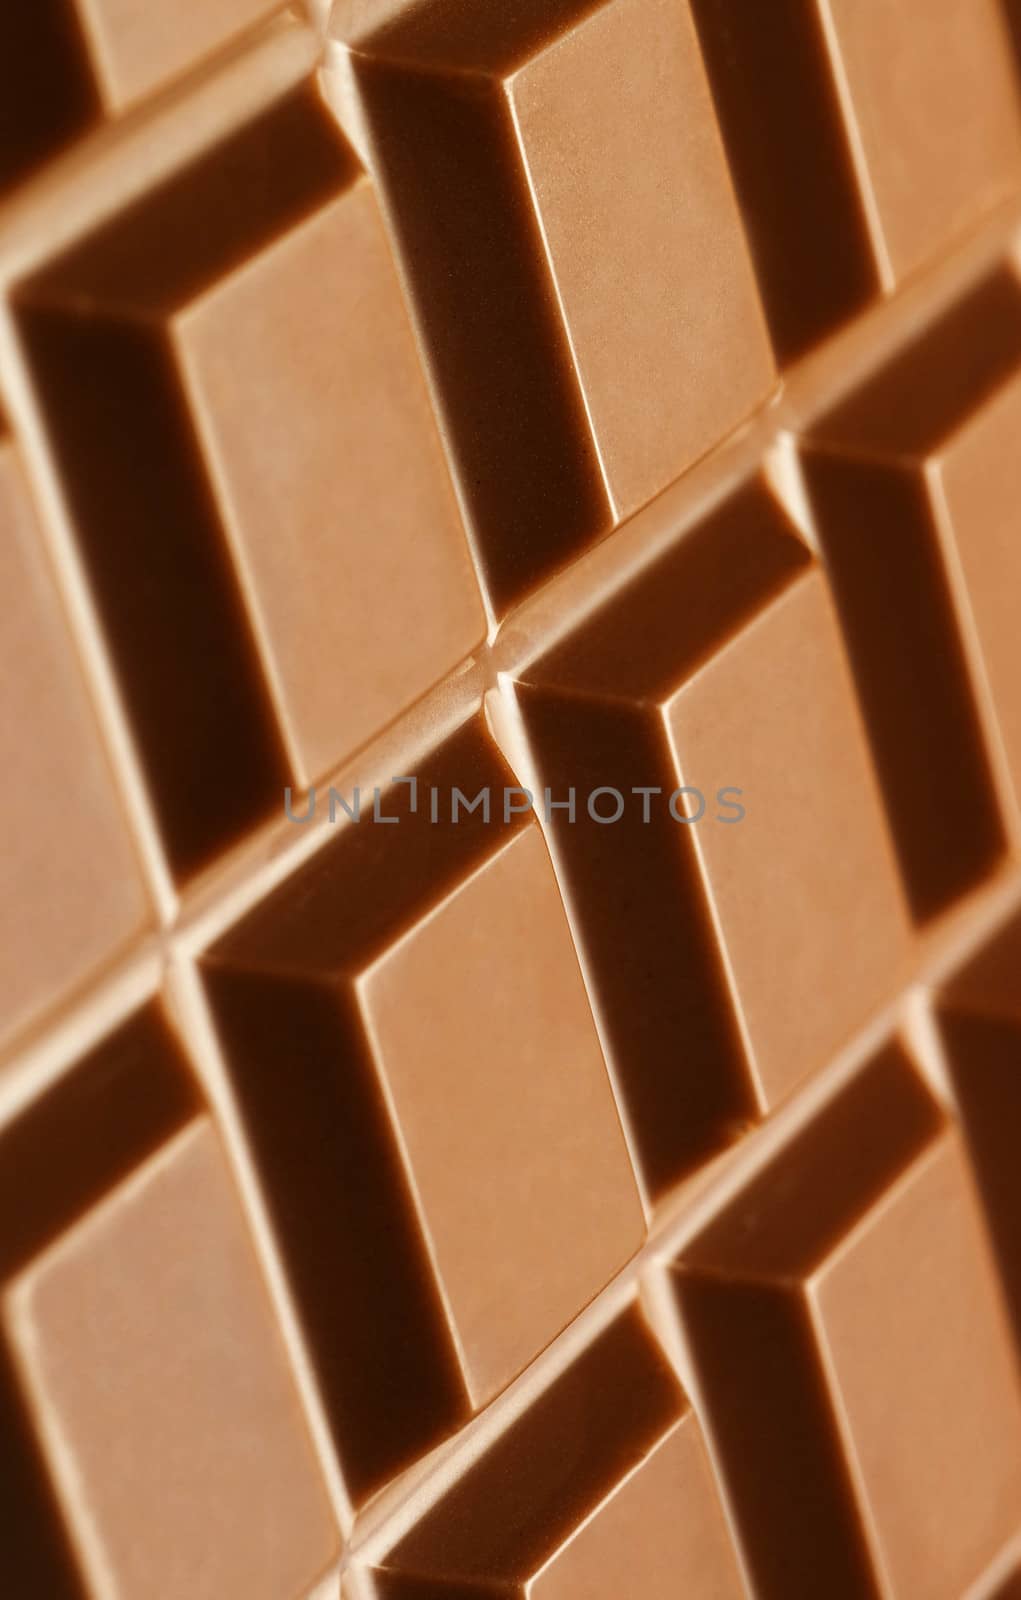 texture of chocolate bar by shutswis